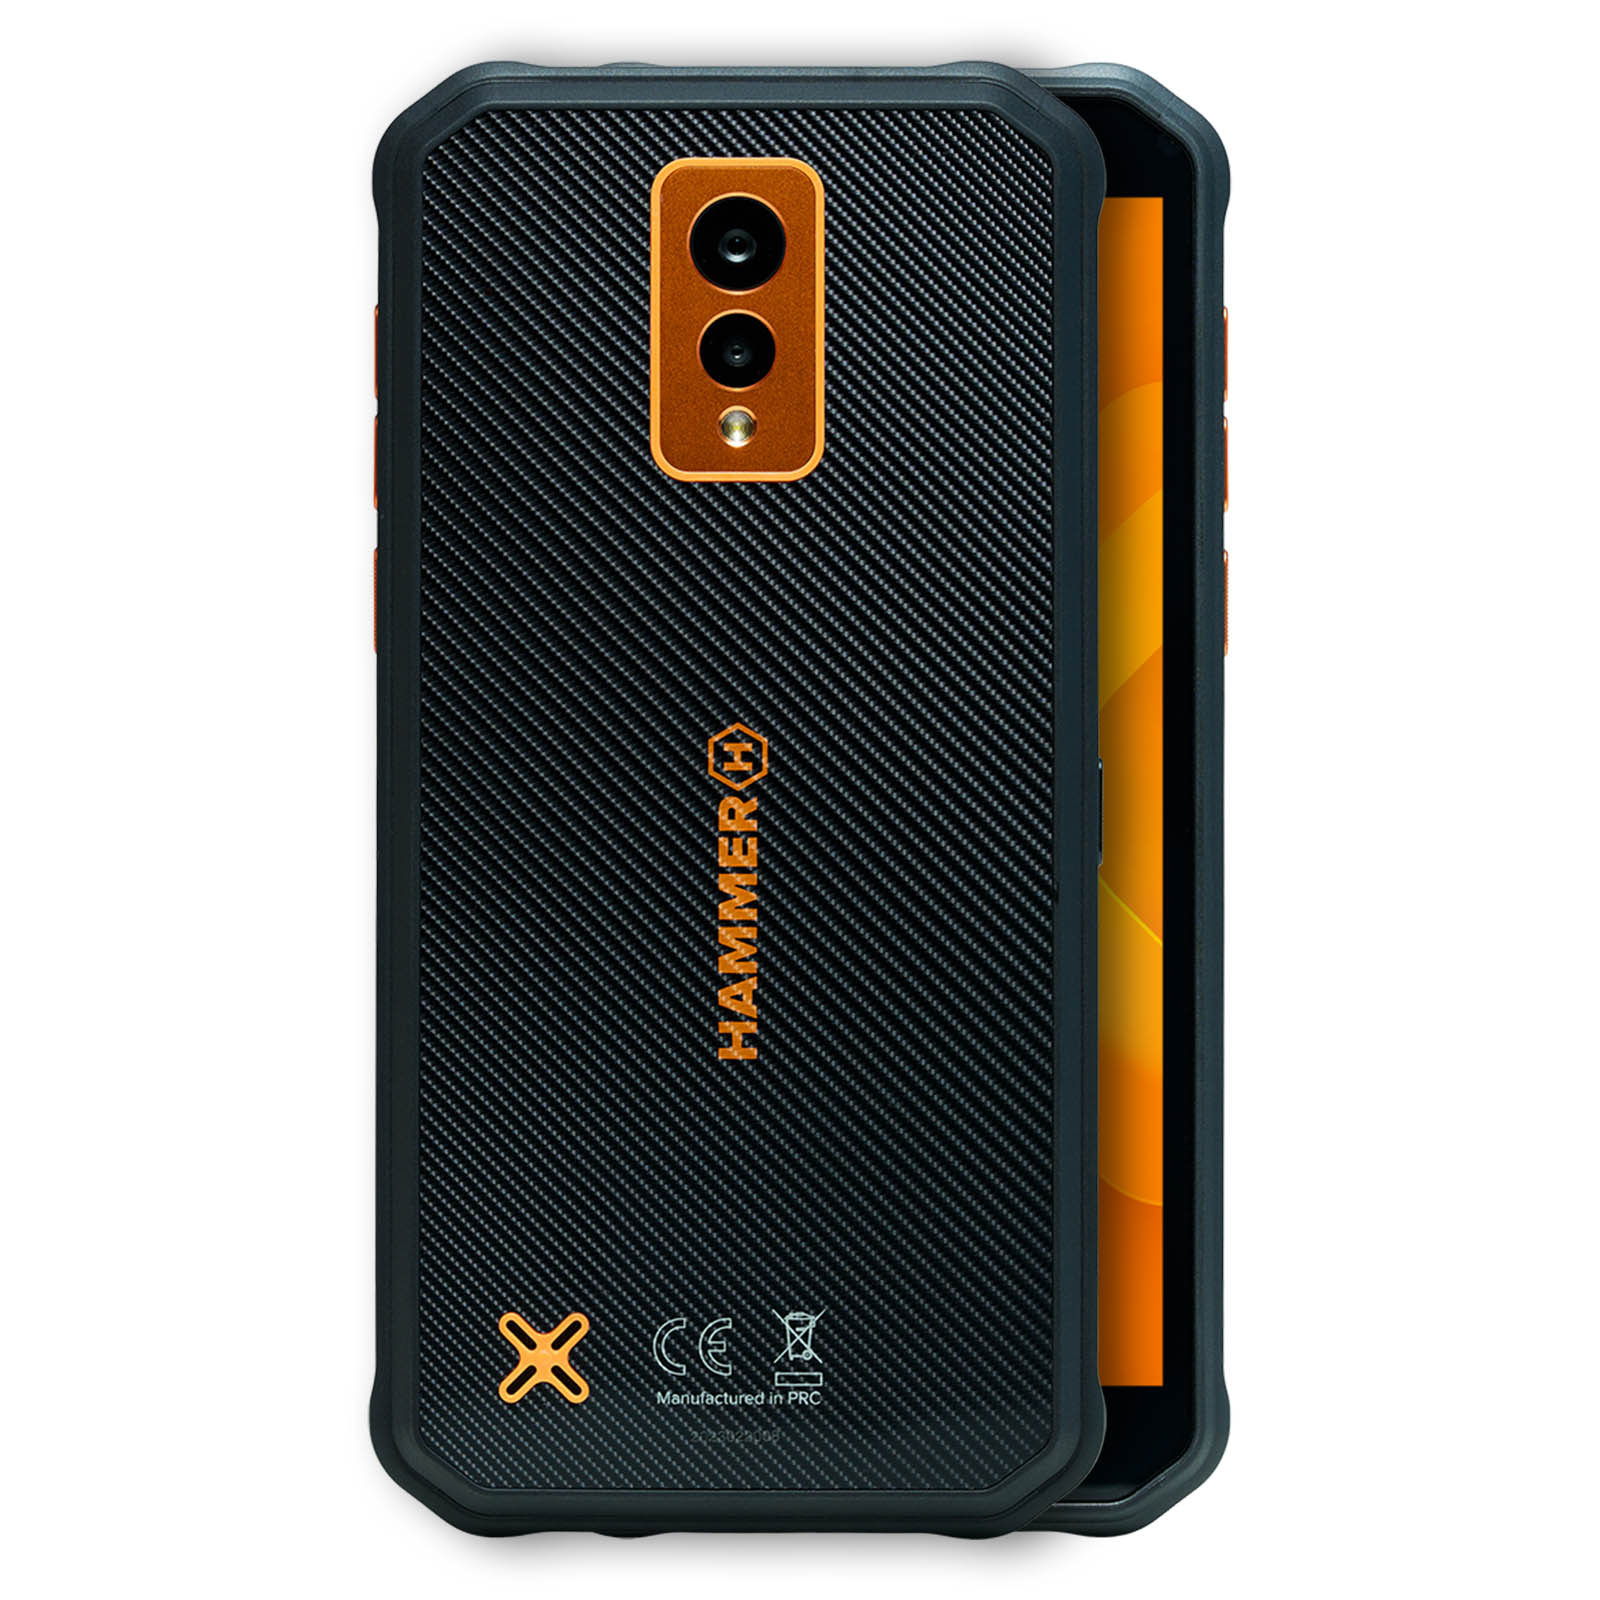 HAMMER Energy X 4G LTE Orange Dual SIM 64 GB